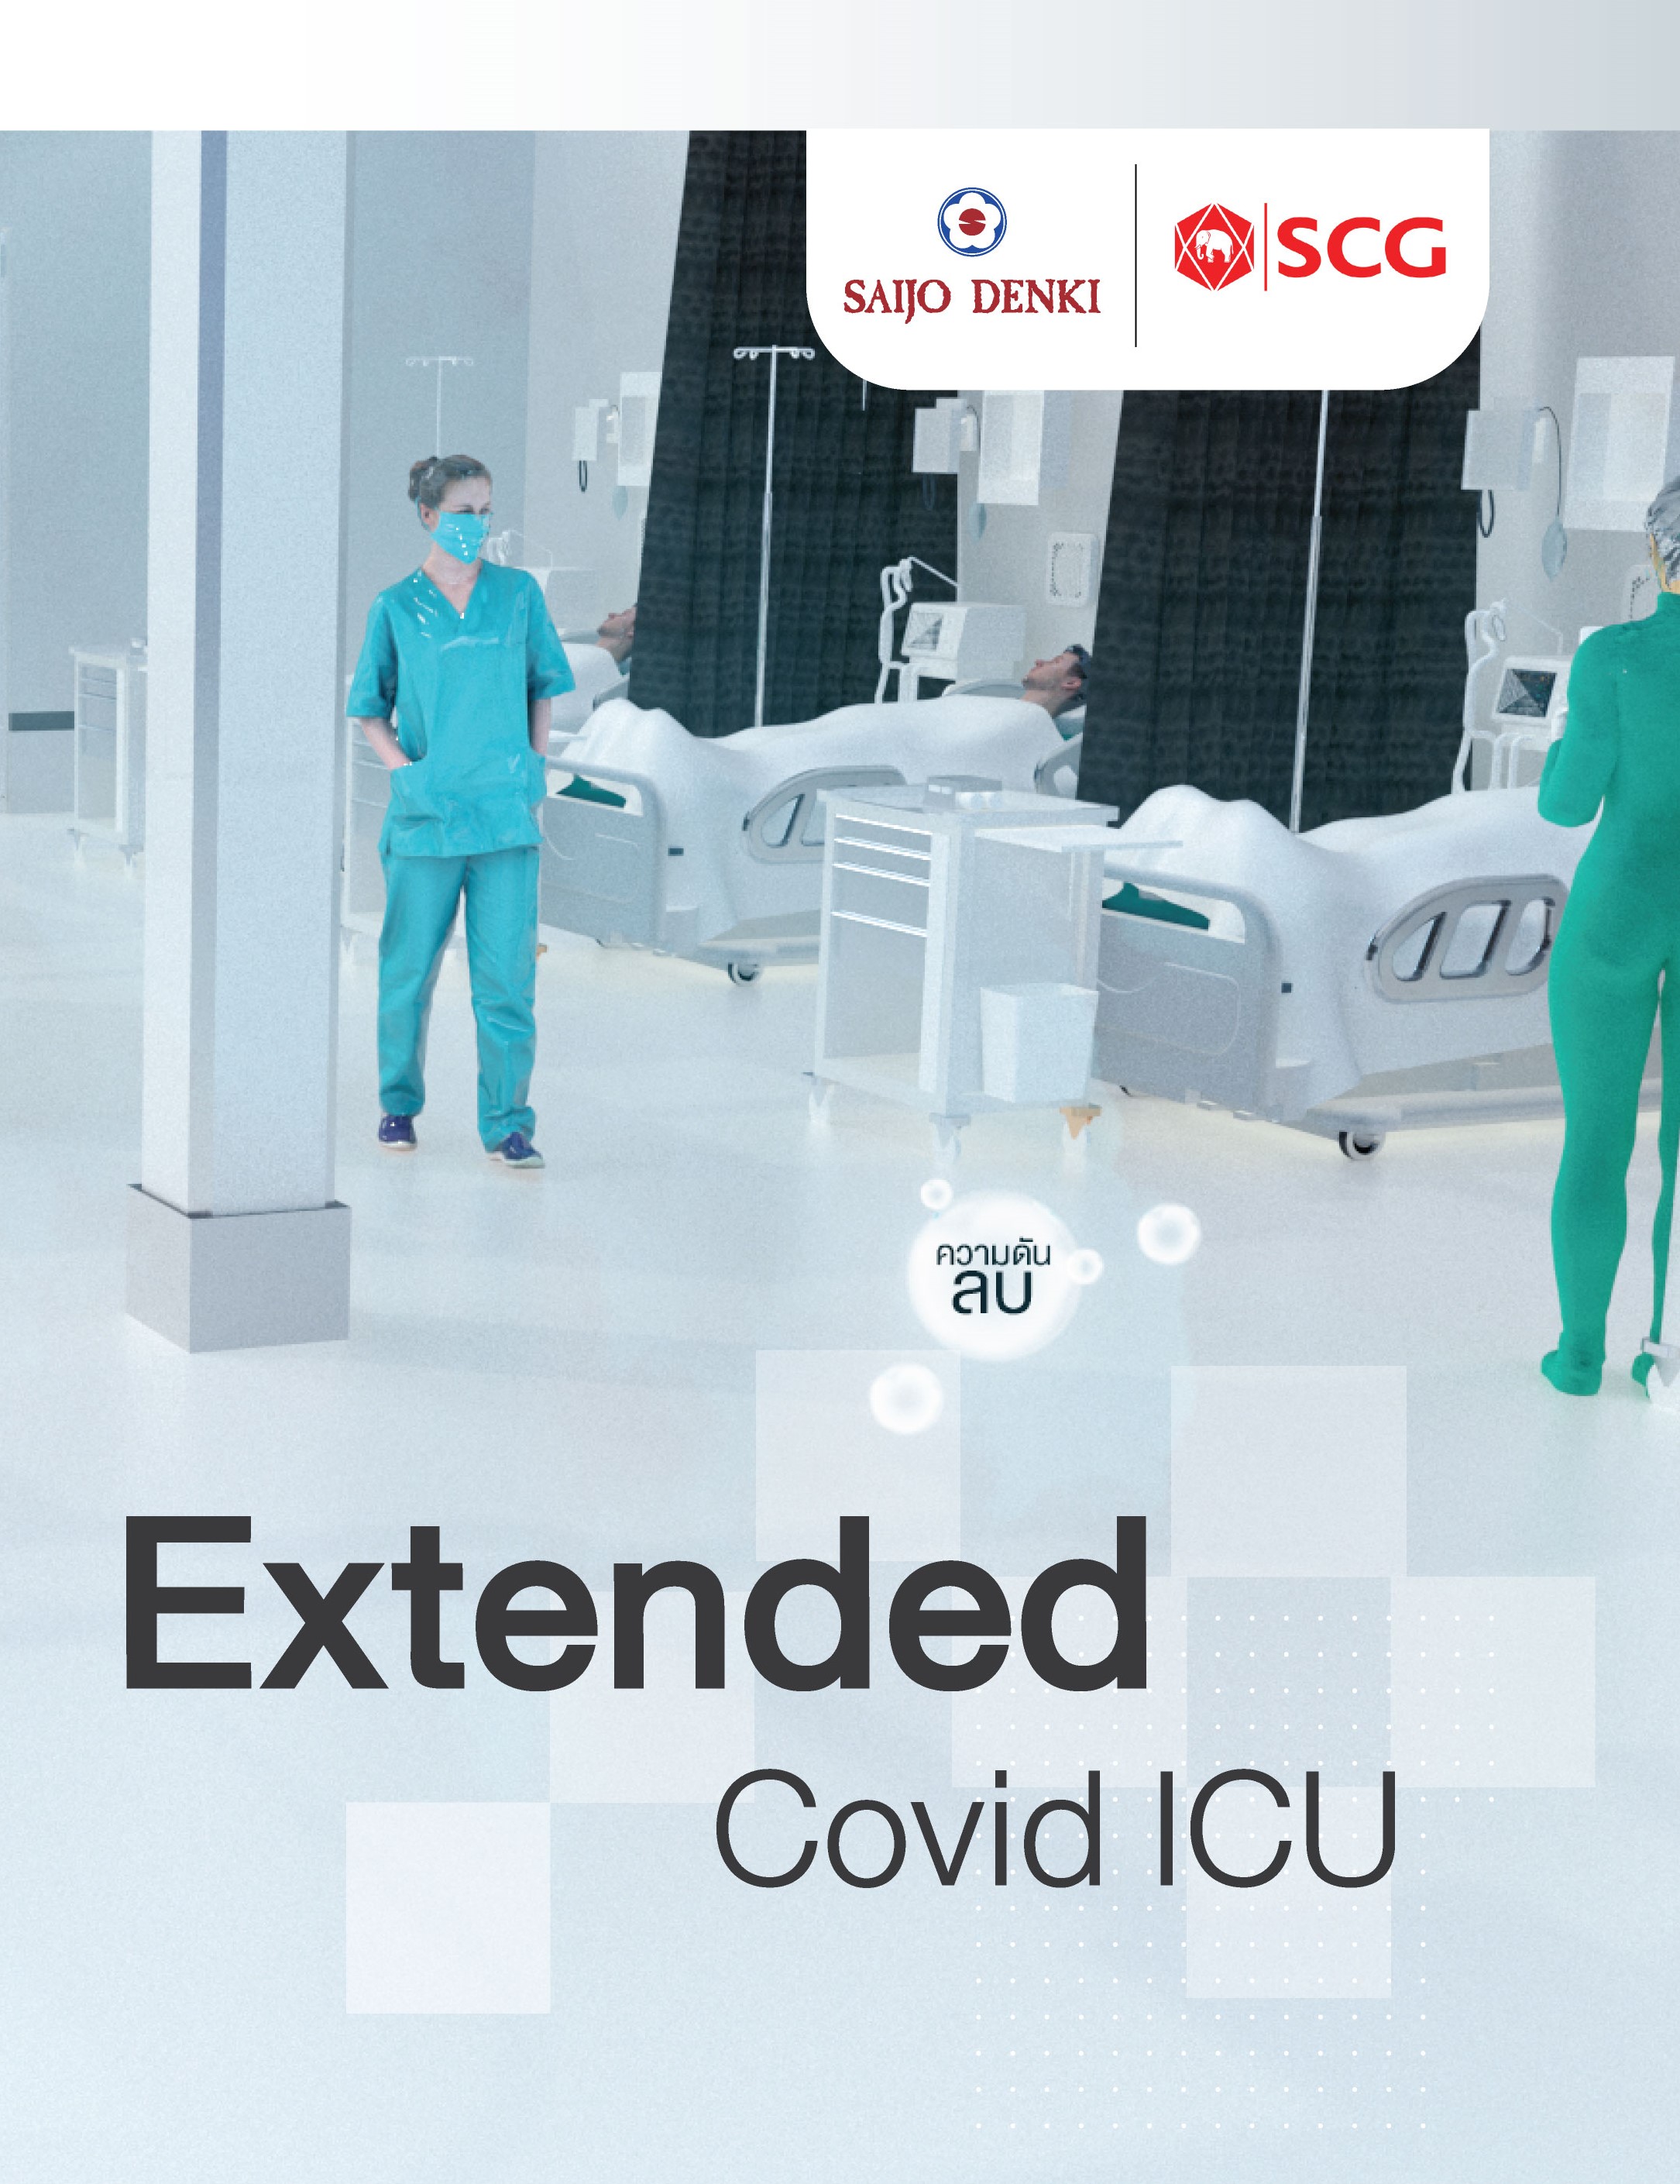 Extended Covid ICU SAIJO DENKI X SCG